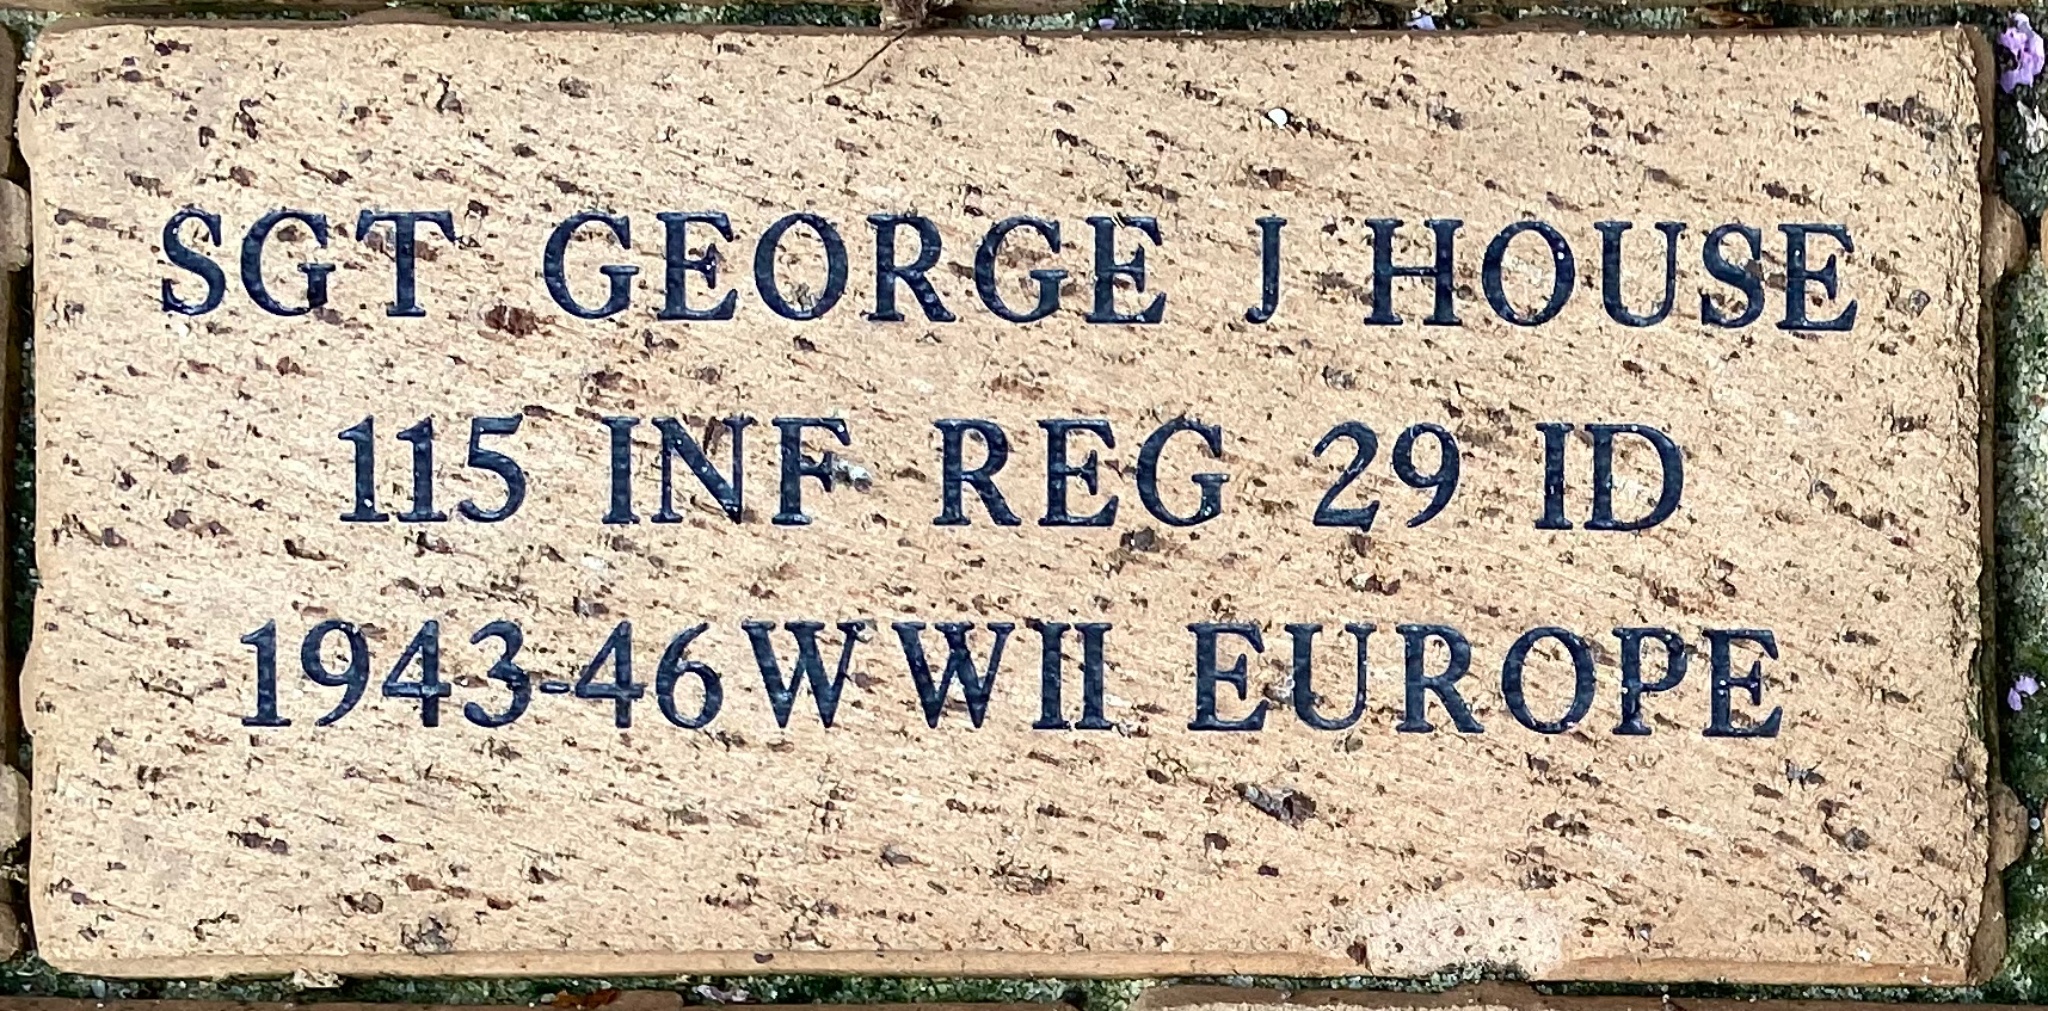 SGT GEORGE J HOUSE 115 INF REG 29 ID 1943-46 WWII EUROPE